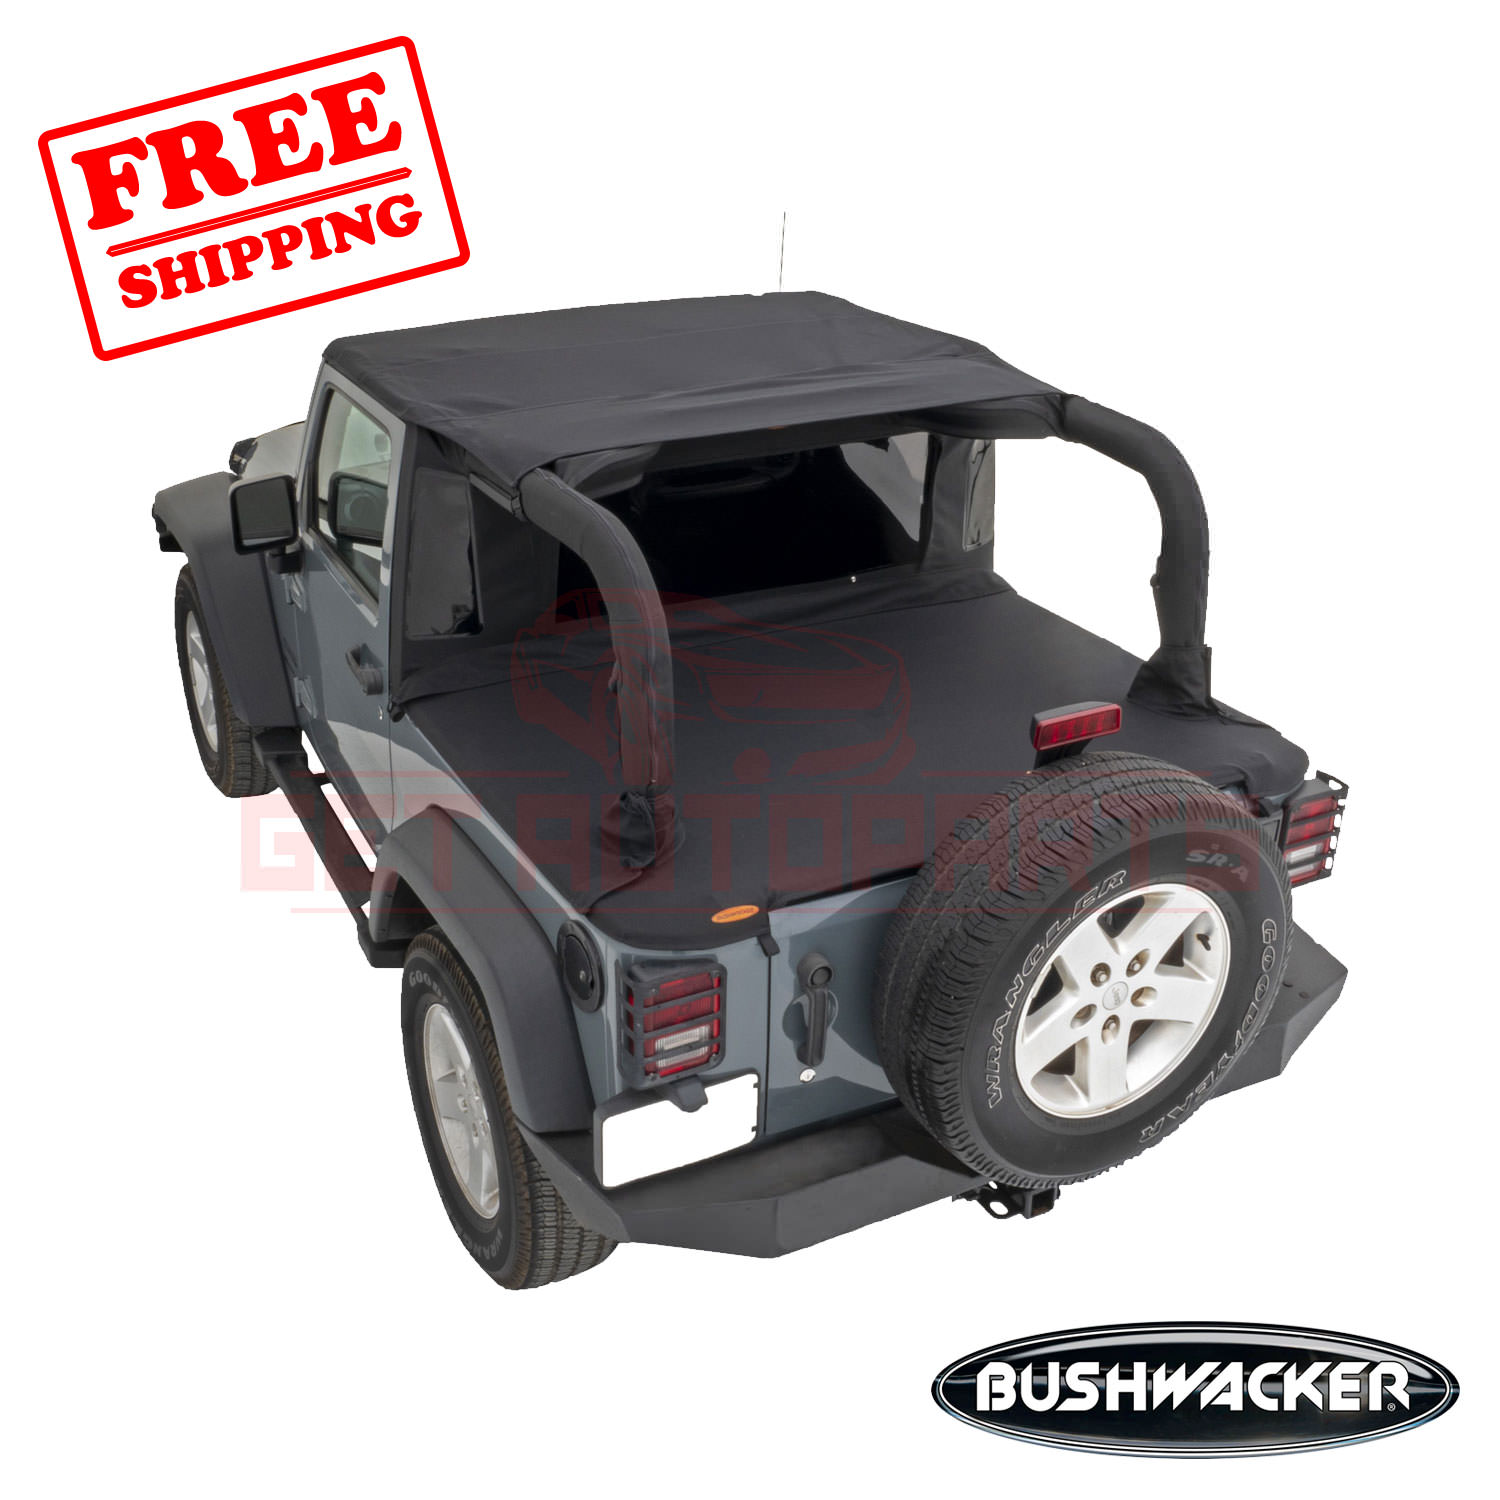 Bushwacker Soft Top for Jeep Wrangler JK 2018 657896964185 | eBay